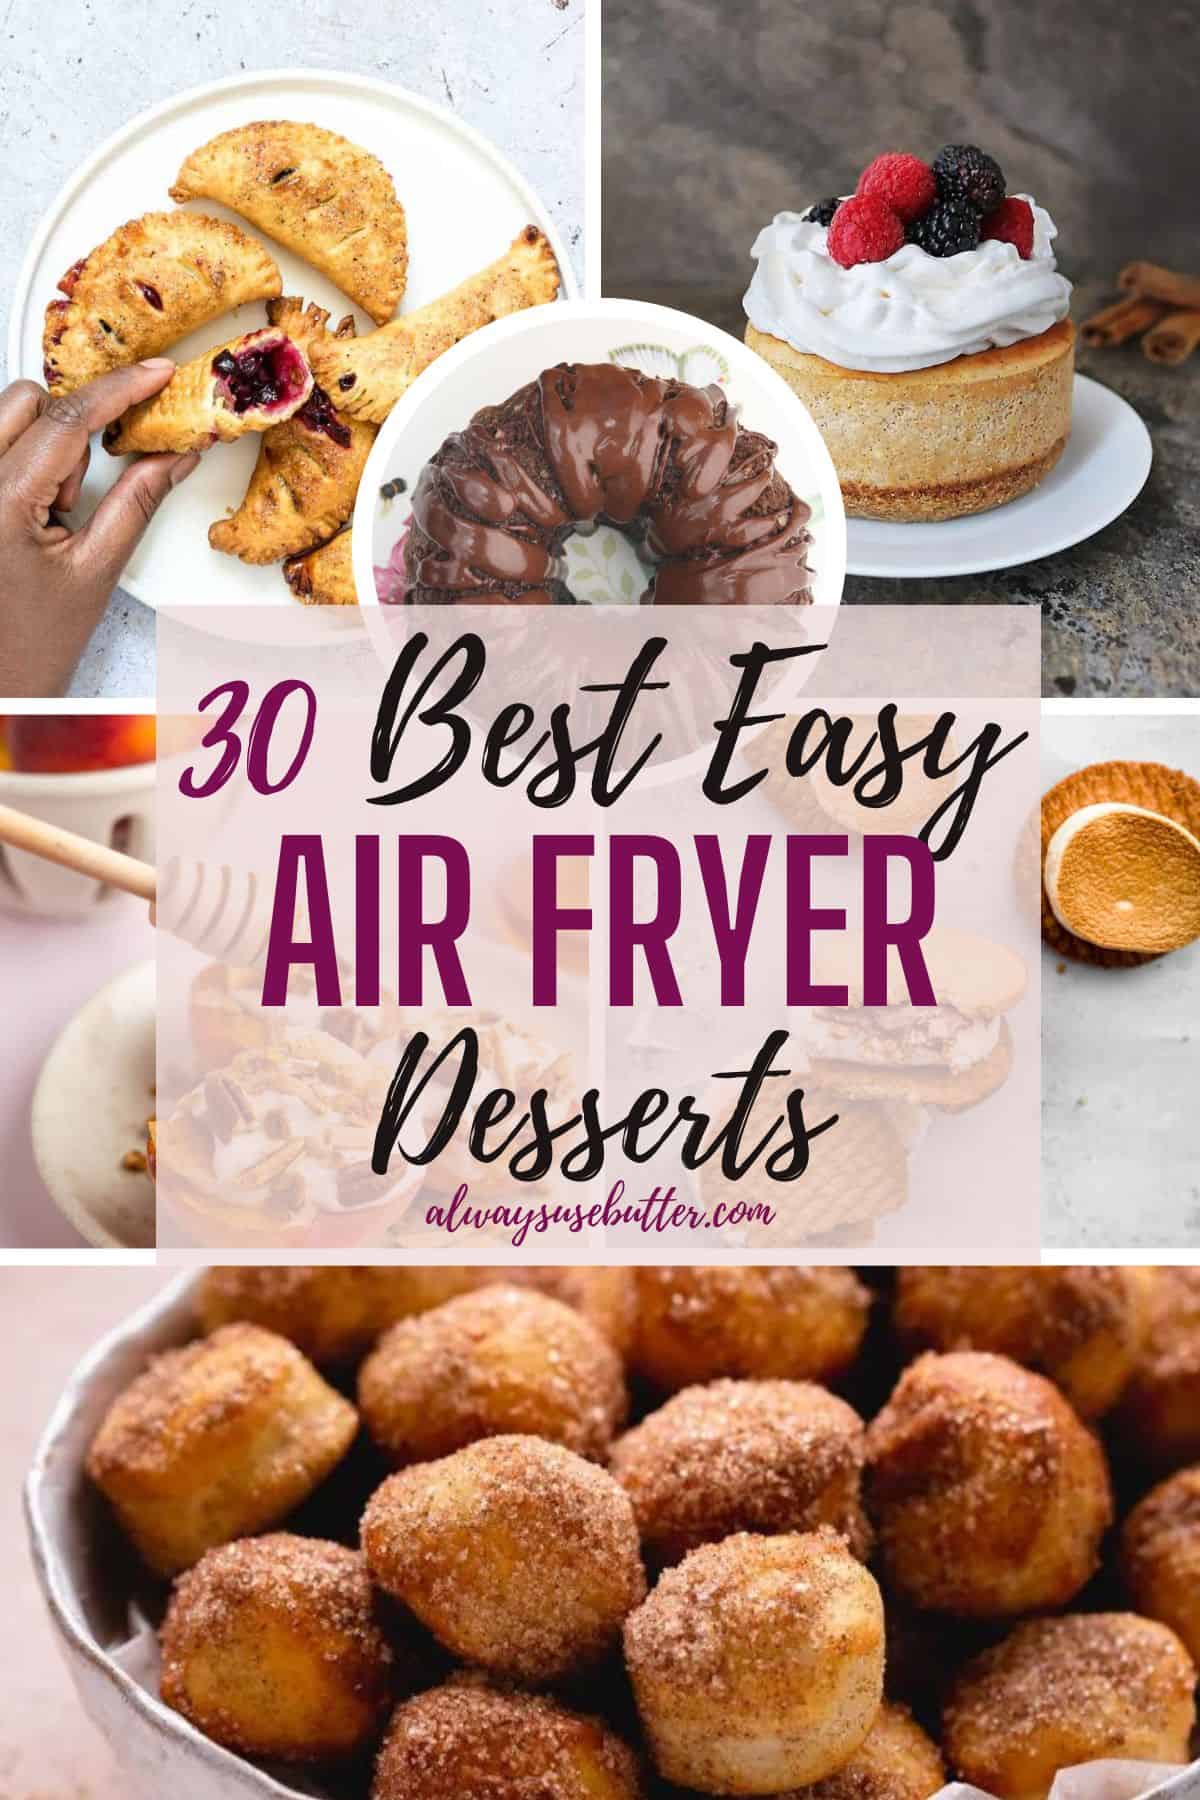 Collage showing different air fryer desserts.